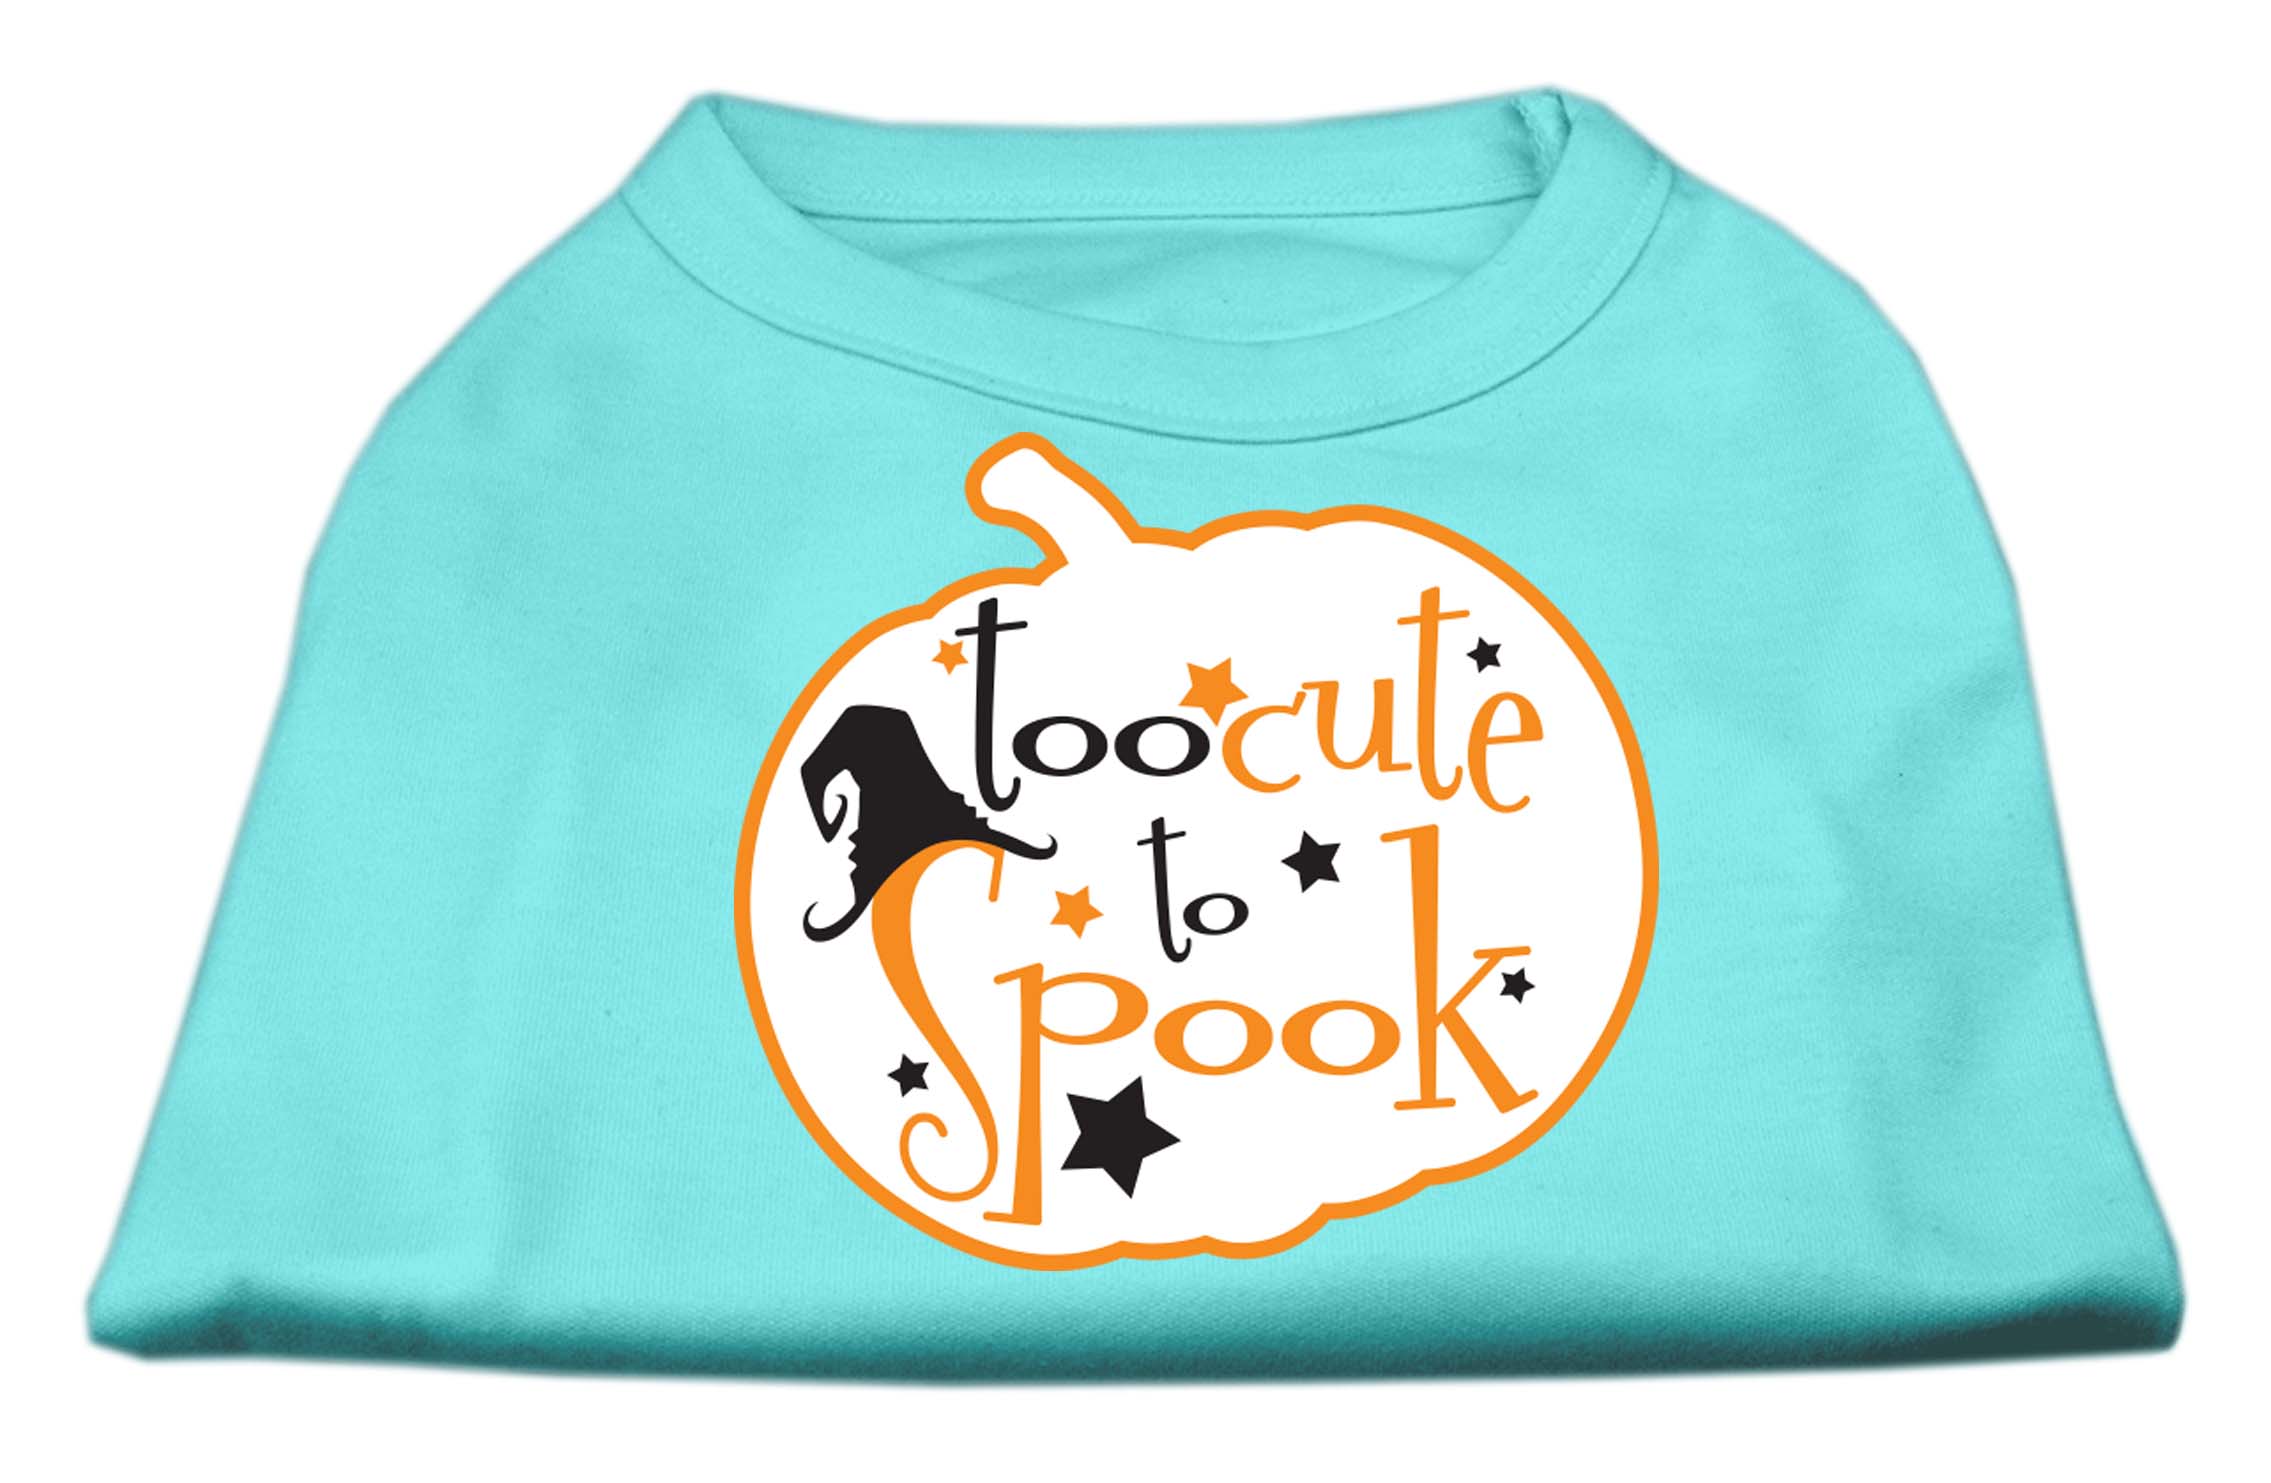 Too Cute to Spook Screen Print Dog Shirt Aqua Lg